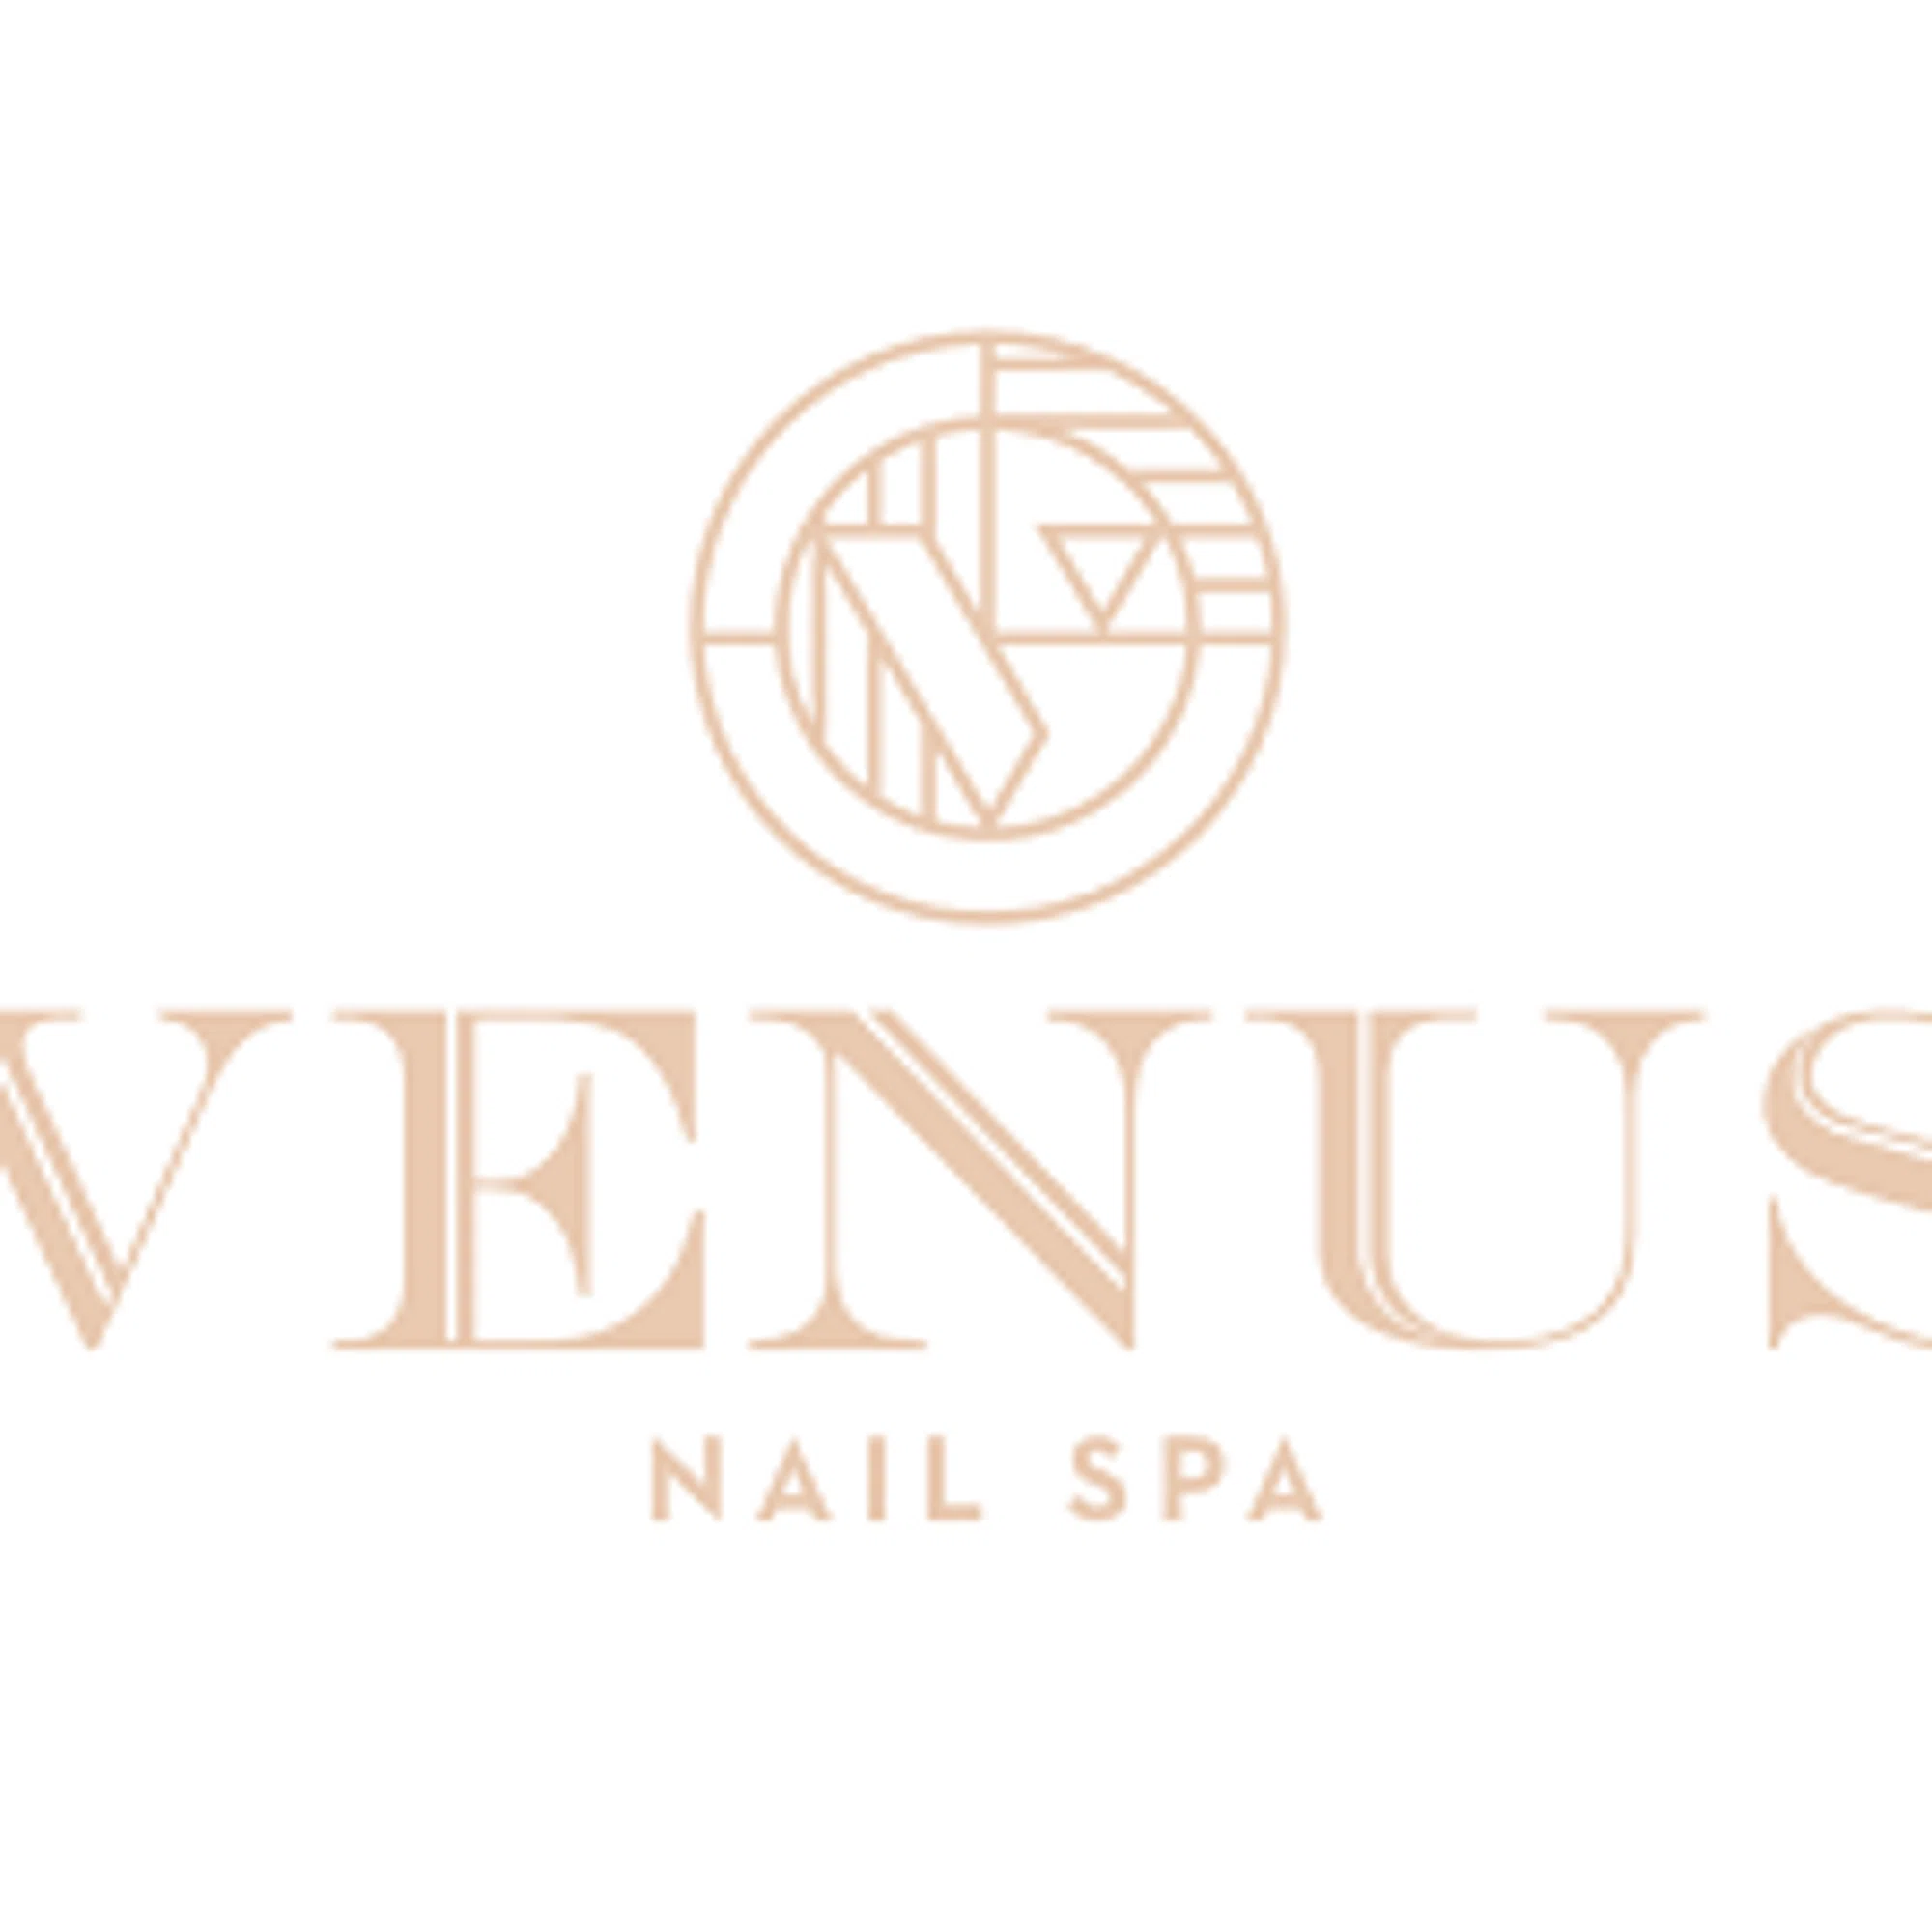 Venus Nail Spa